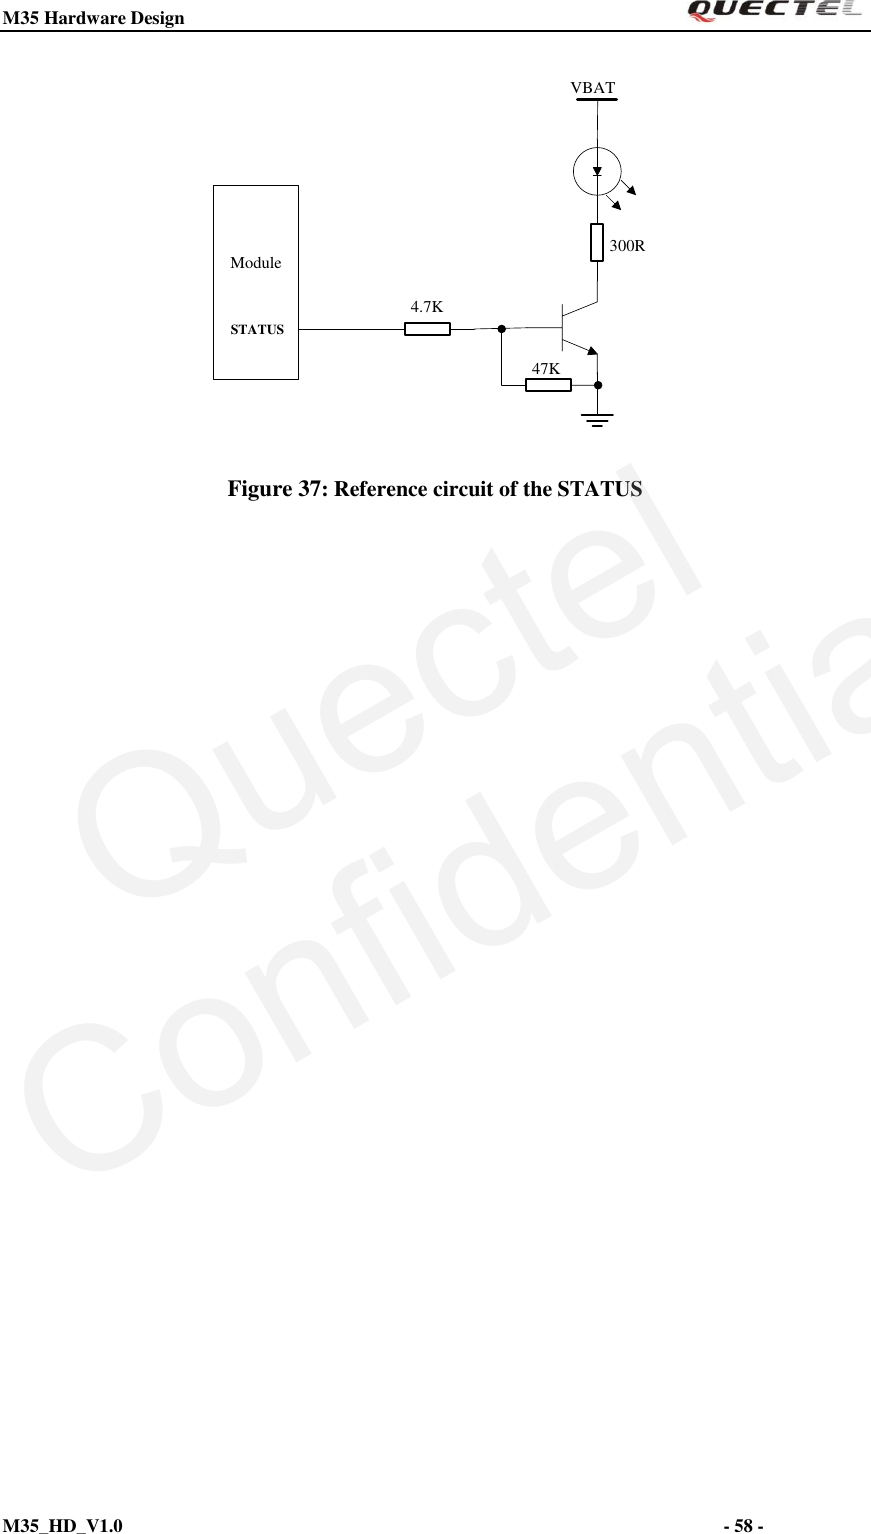 M35 Hardware Design                                                                  M35_HD_V1.0                                                                                                                         - 58 -    Module 300R4.7K47KVBATSTATUS Figure 37: Reference circuit of the STATUS              QuectelConfidential